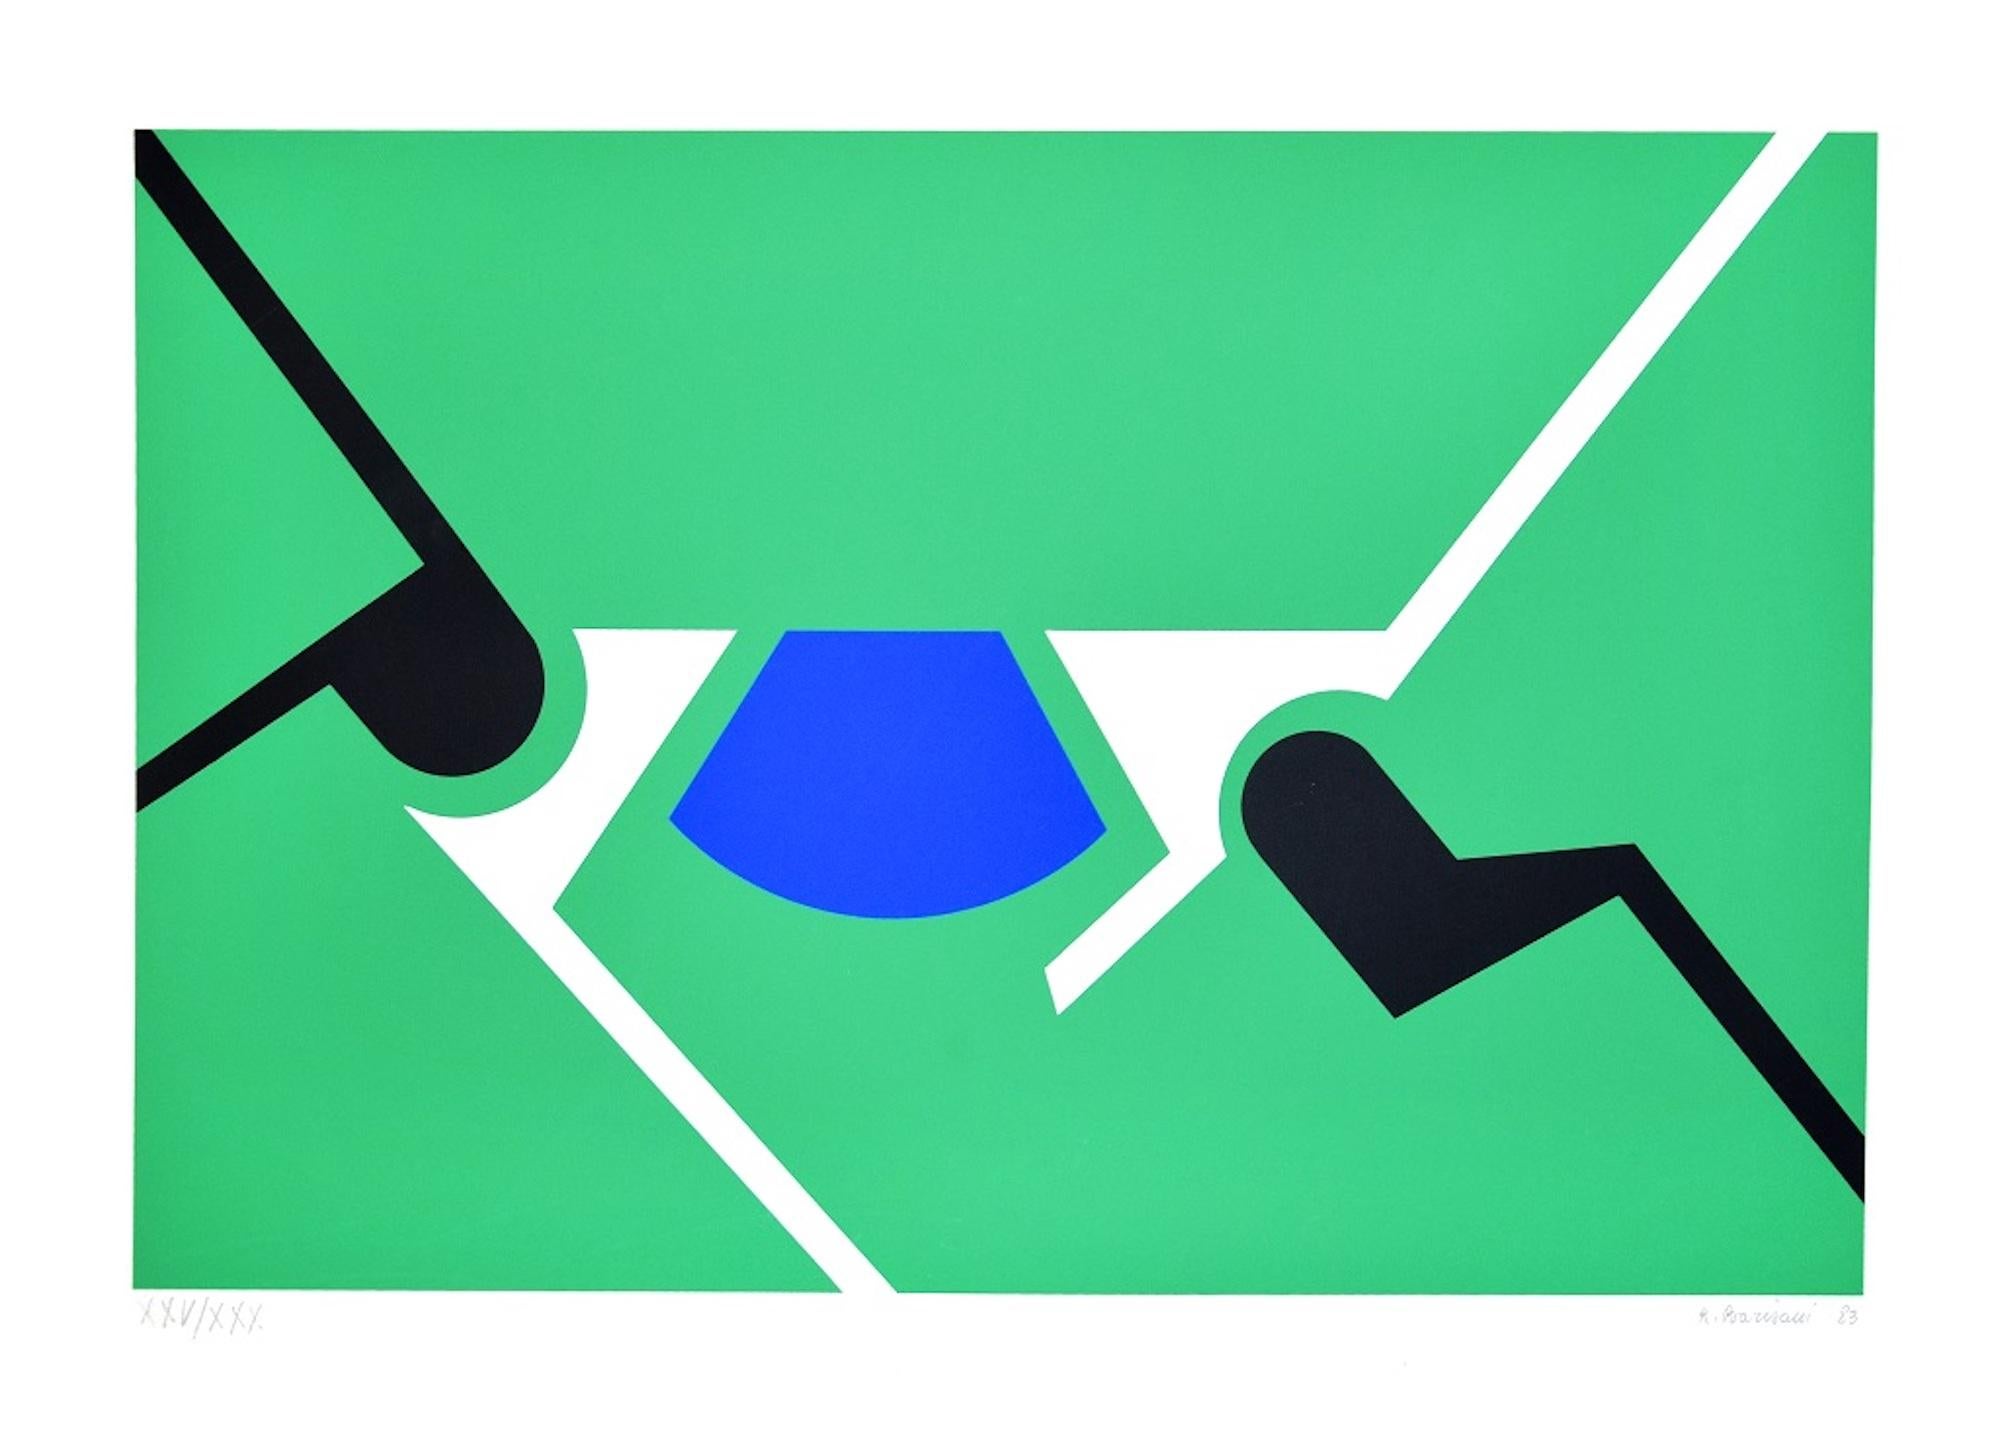 Green Shapes - Original Screen Print by Renato Barisani - 1983